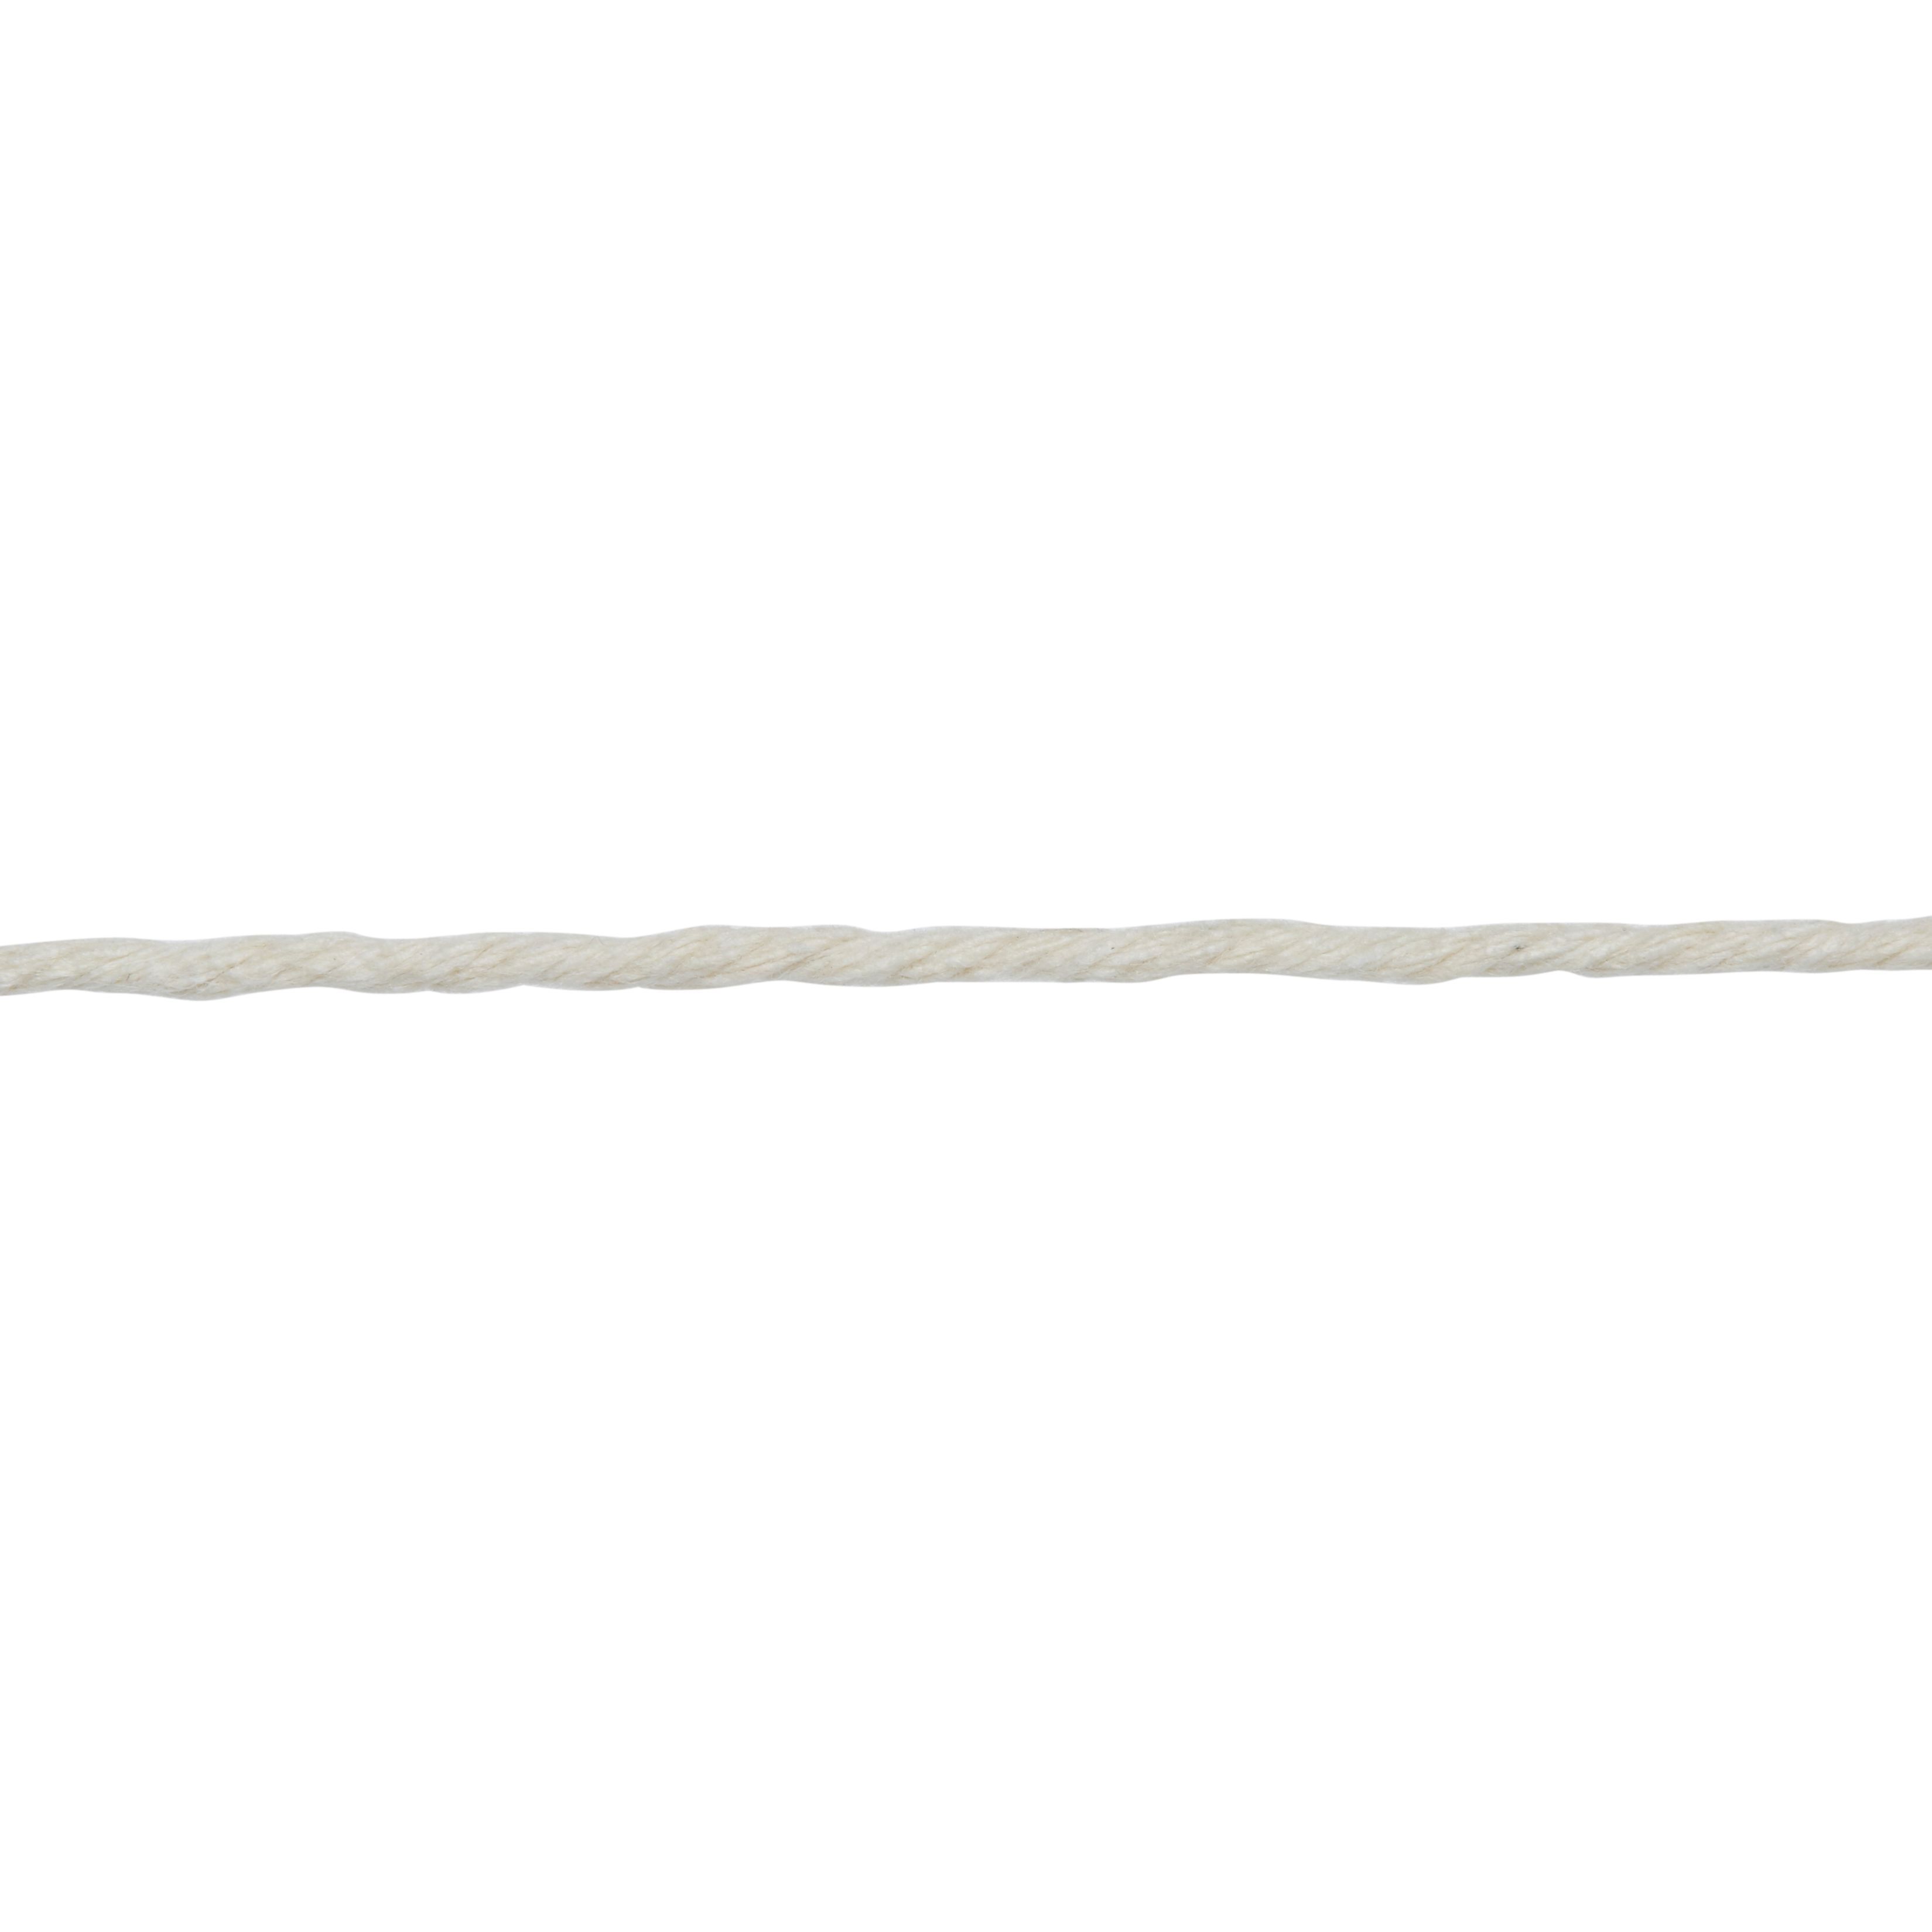 Diall White Cotton Twine, (L)60m (Dia)1.2mm